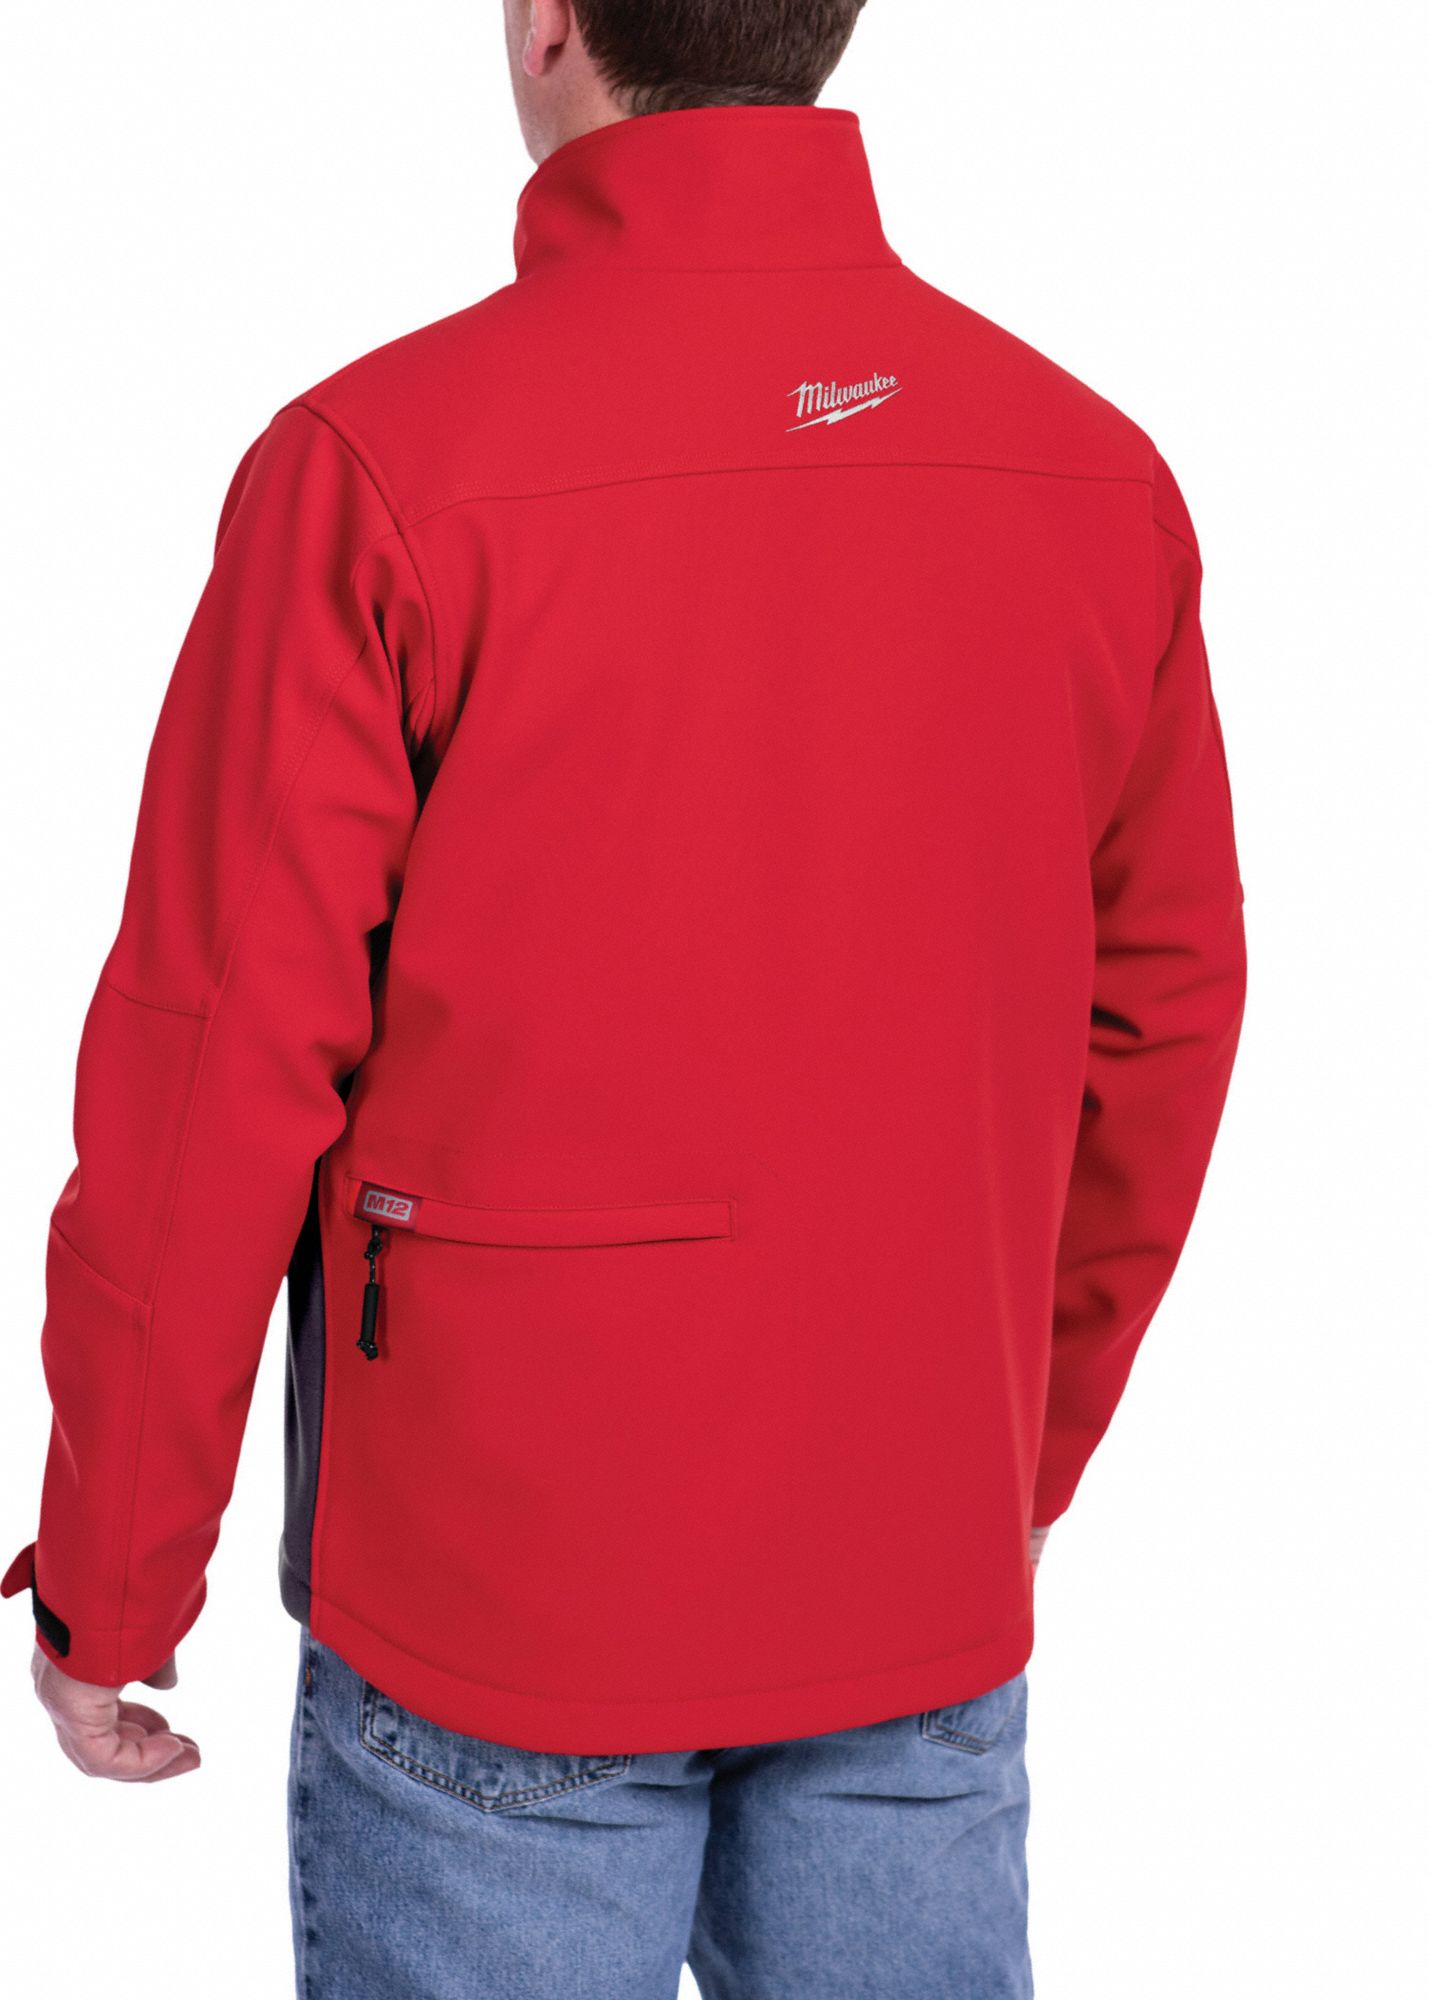 milwaukee-heated-jacket-s-mens-20-l-red-506h79-202r-21s-48-11-2420-grainger